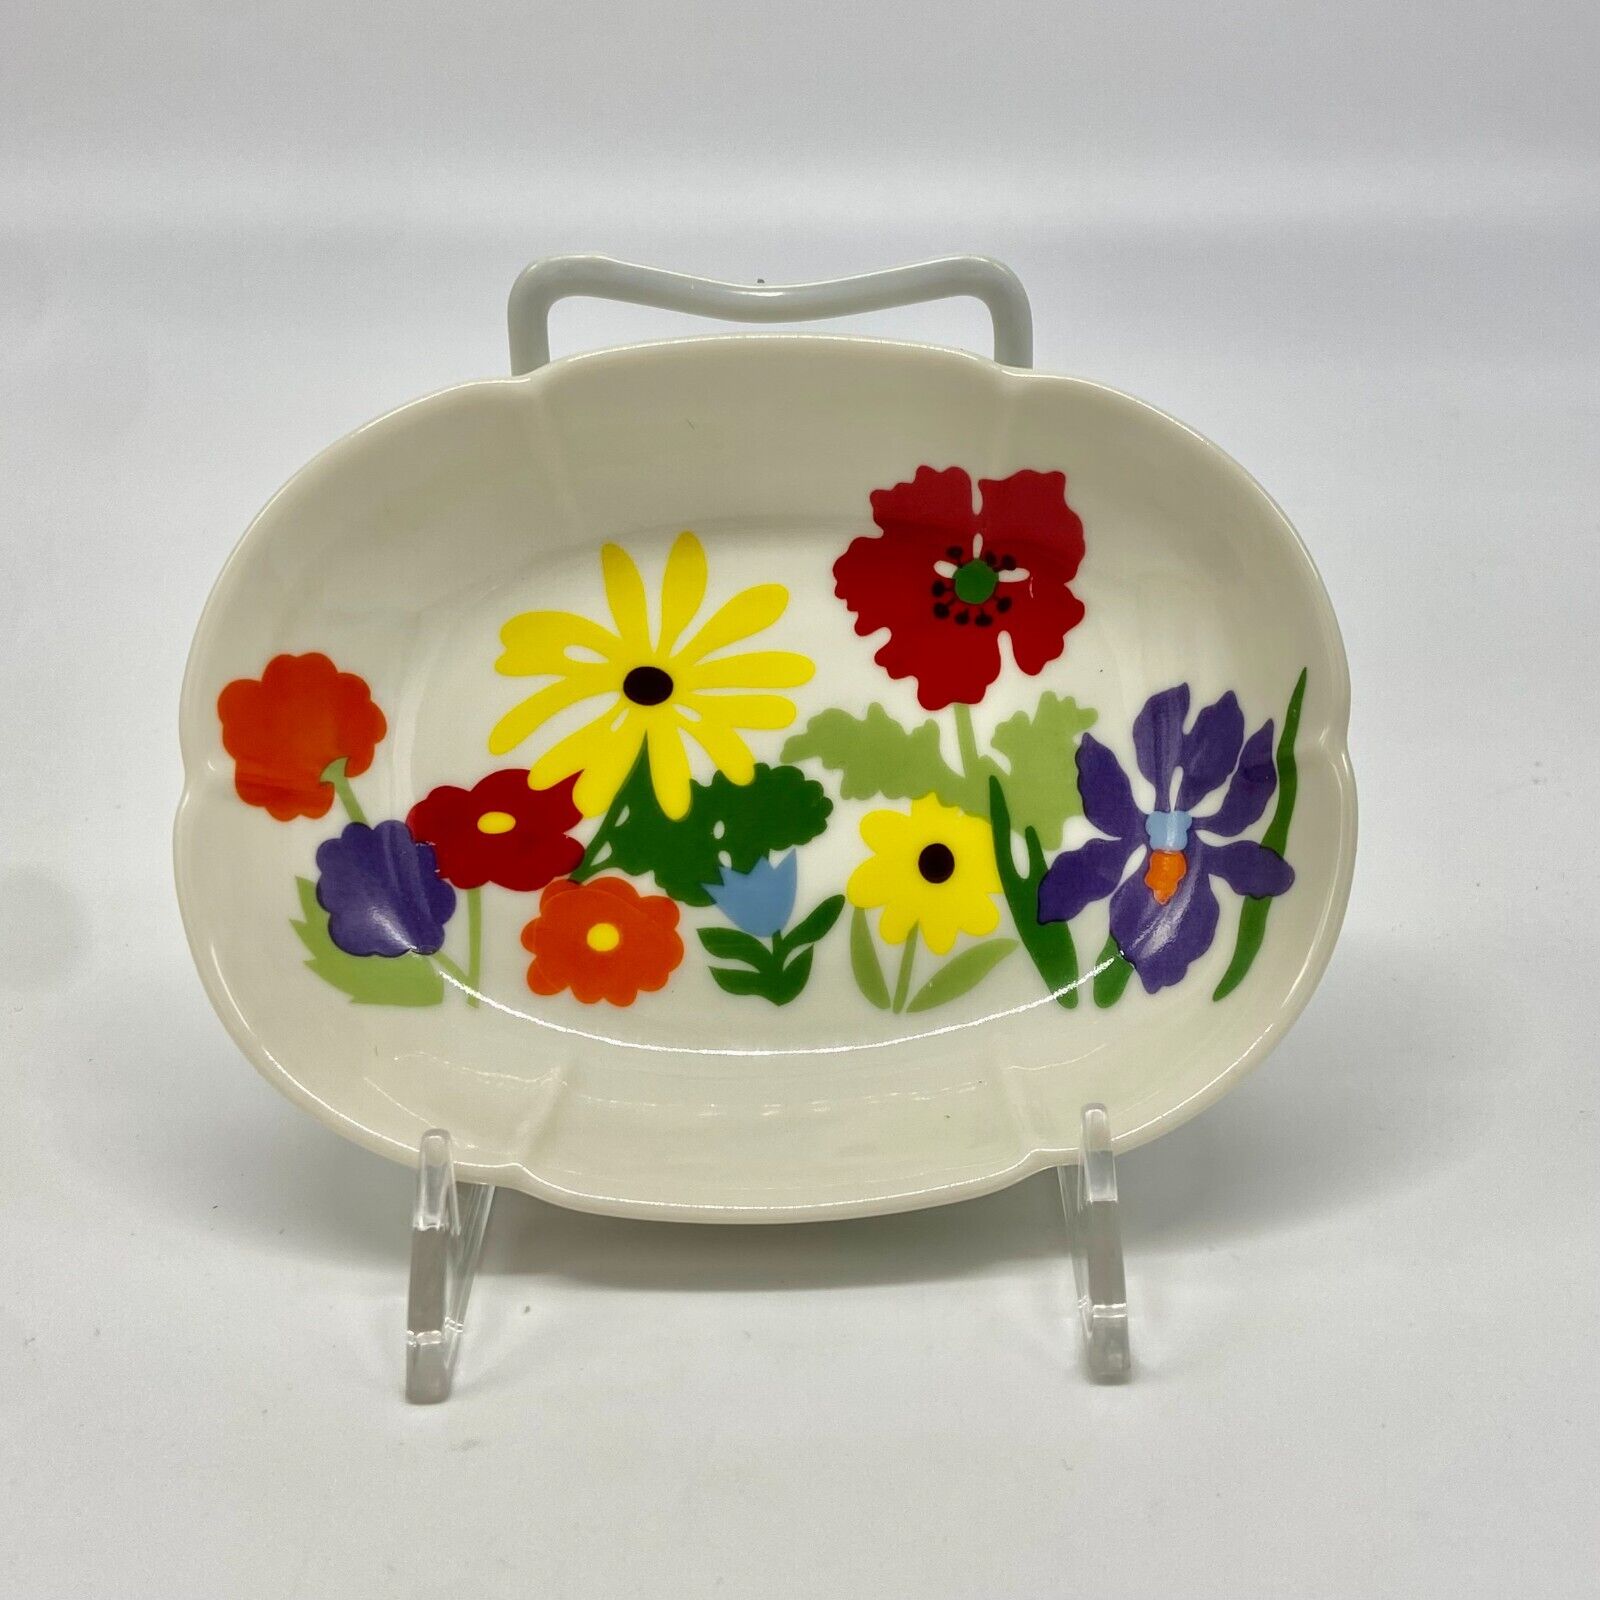 VTG Shibata Porcelain Japan Trinket Soap Dish Graphic Floral Iris Poppy Daisy